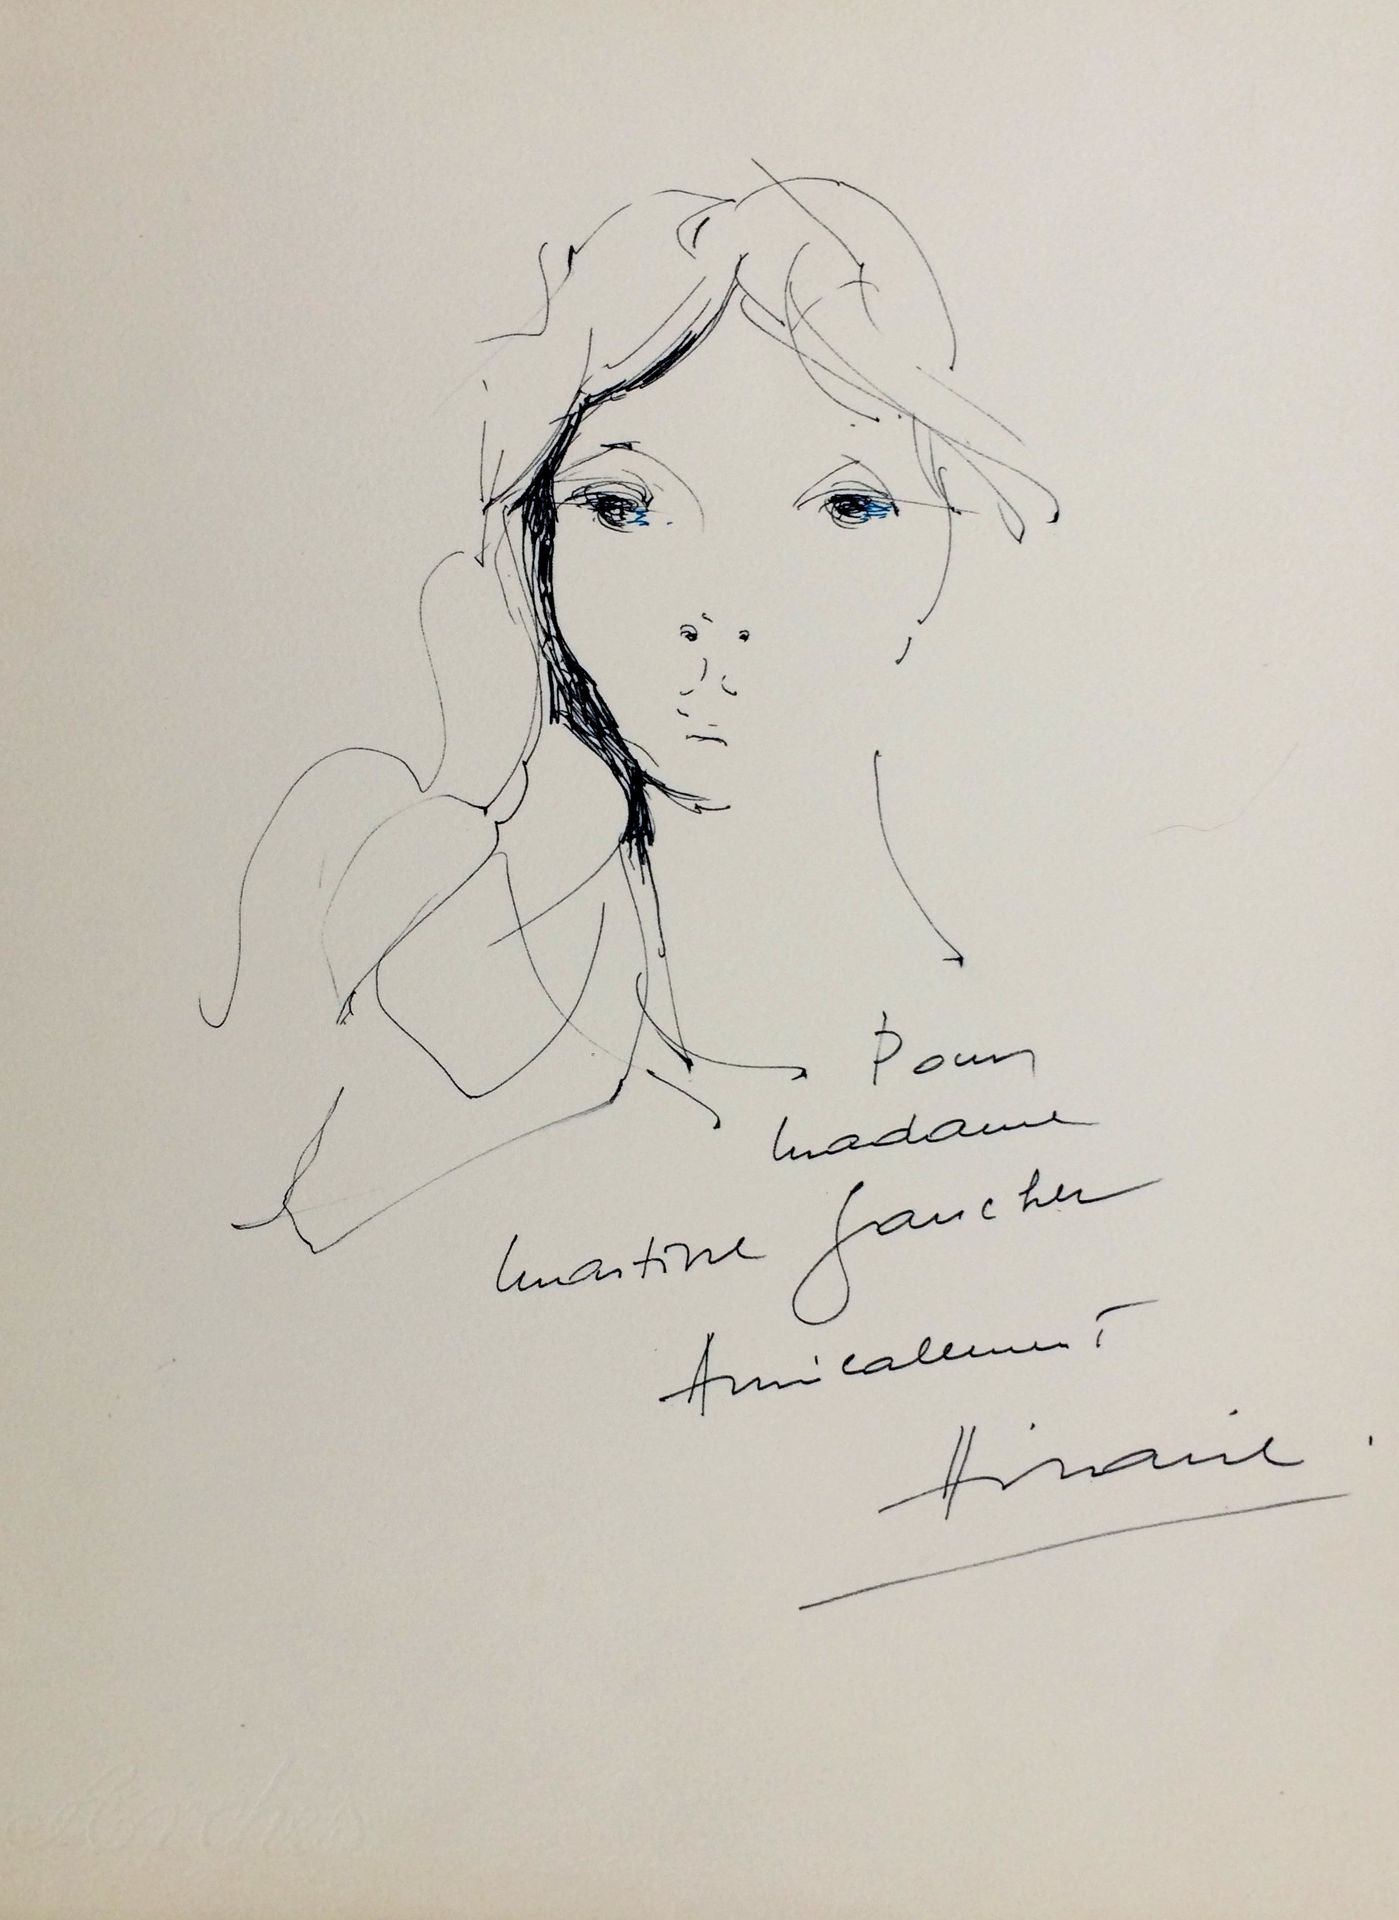 Camille HILAIRE Camille HILAIRE

肖像, 1972年

 

 原创水墨画，已签名并献上

 尺寸：38.5 x 28.5厘米
&hellip;